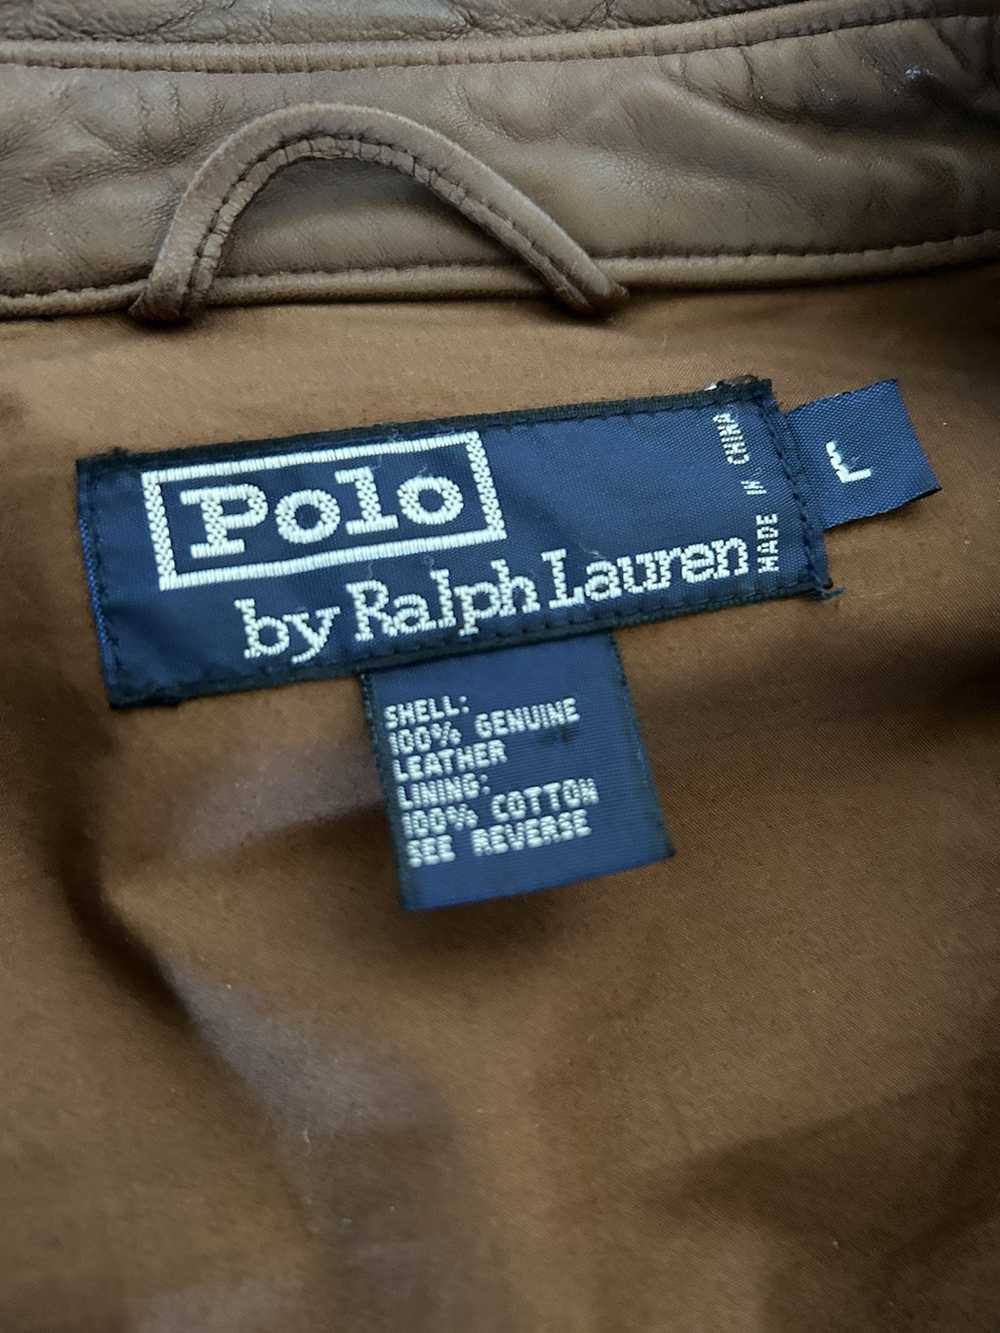 Polo Ralph Lauren Lamb skin Leather Jacket - image 2